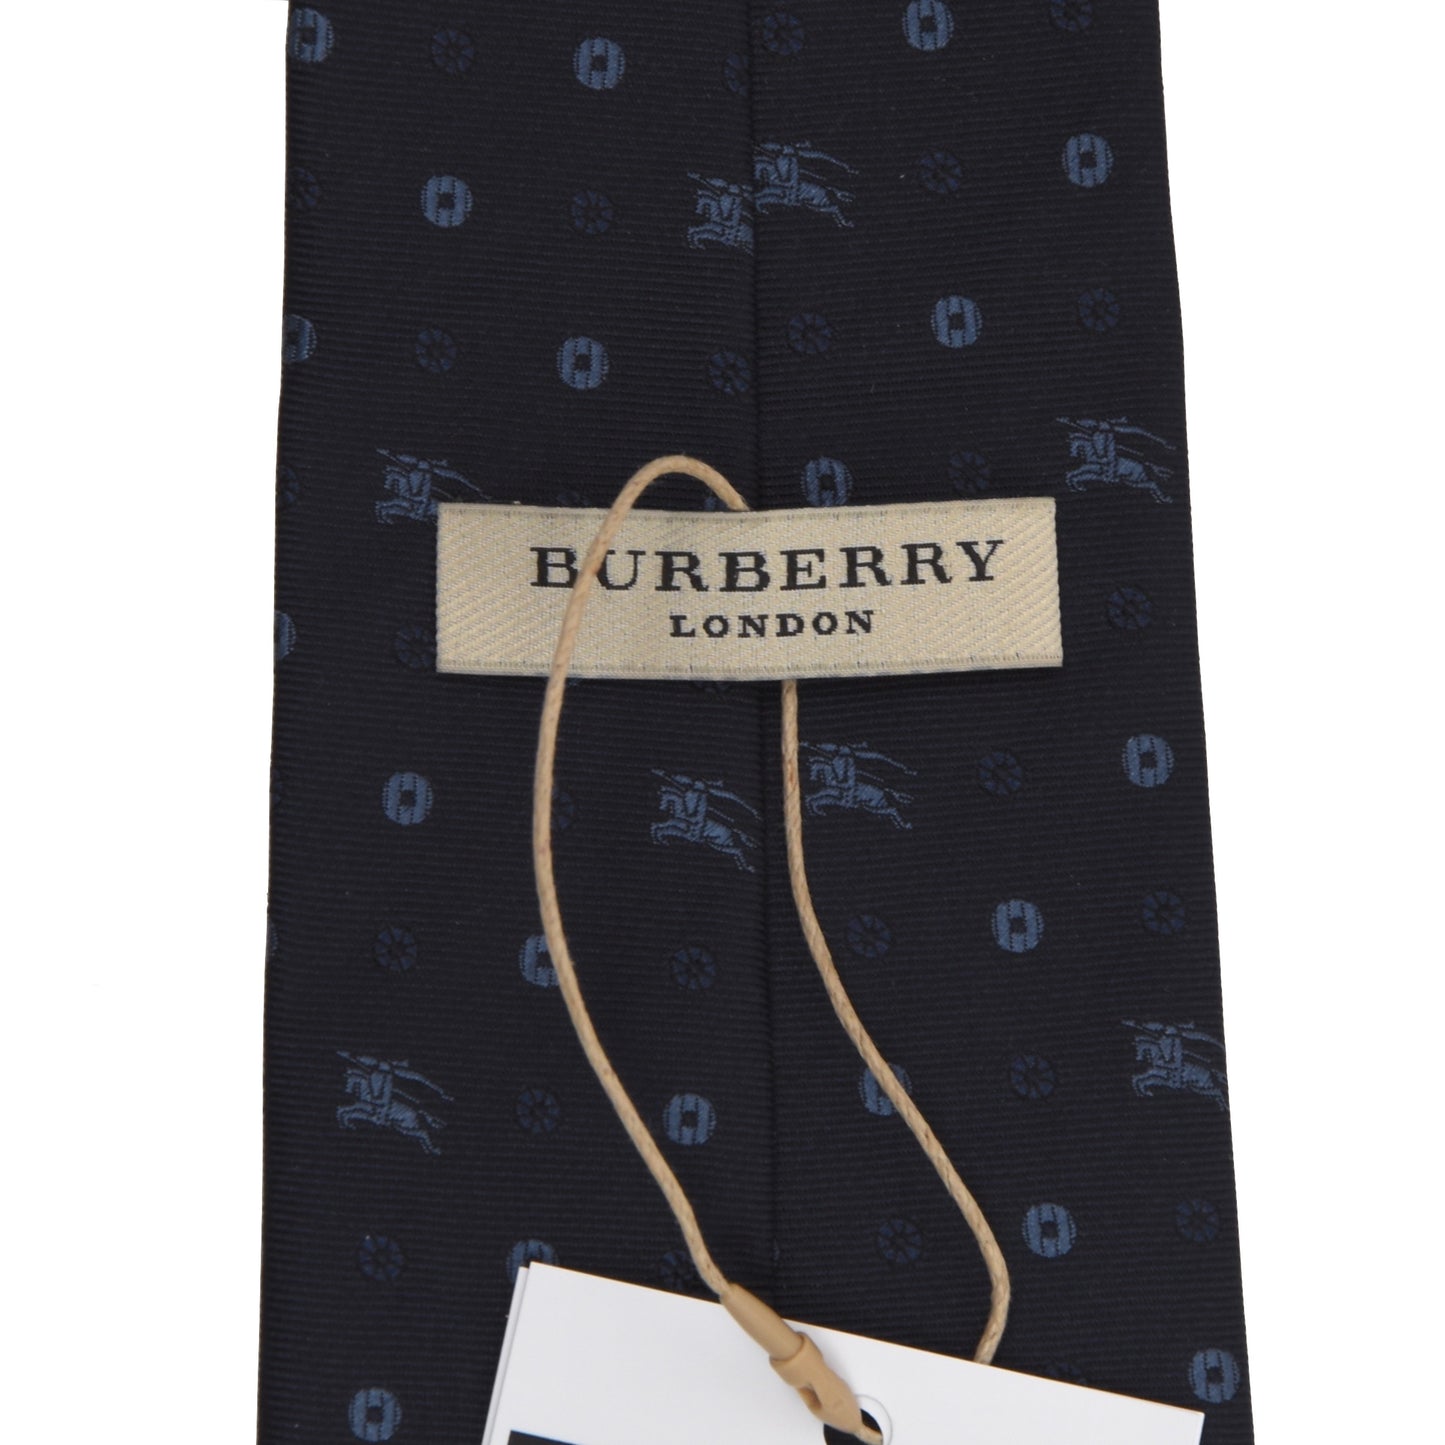 Burberry London Krawatte - Marineblau Prorsum Knights